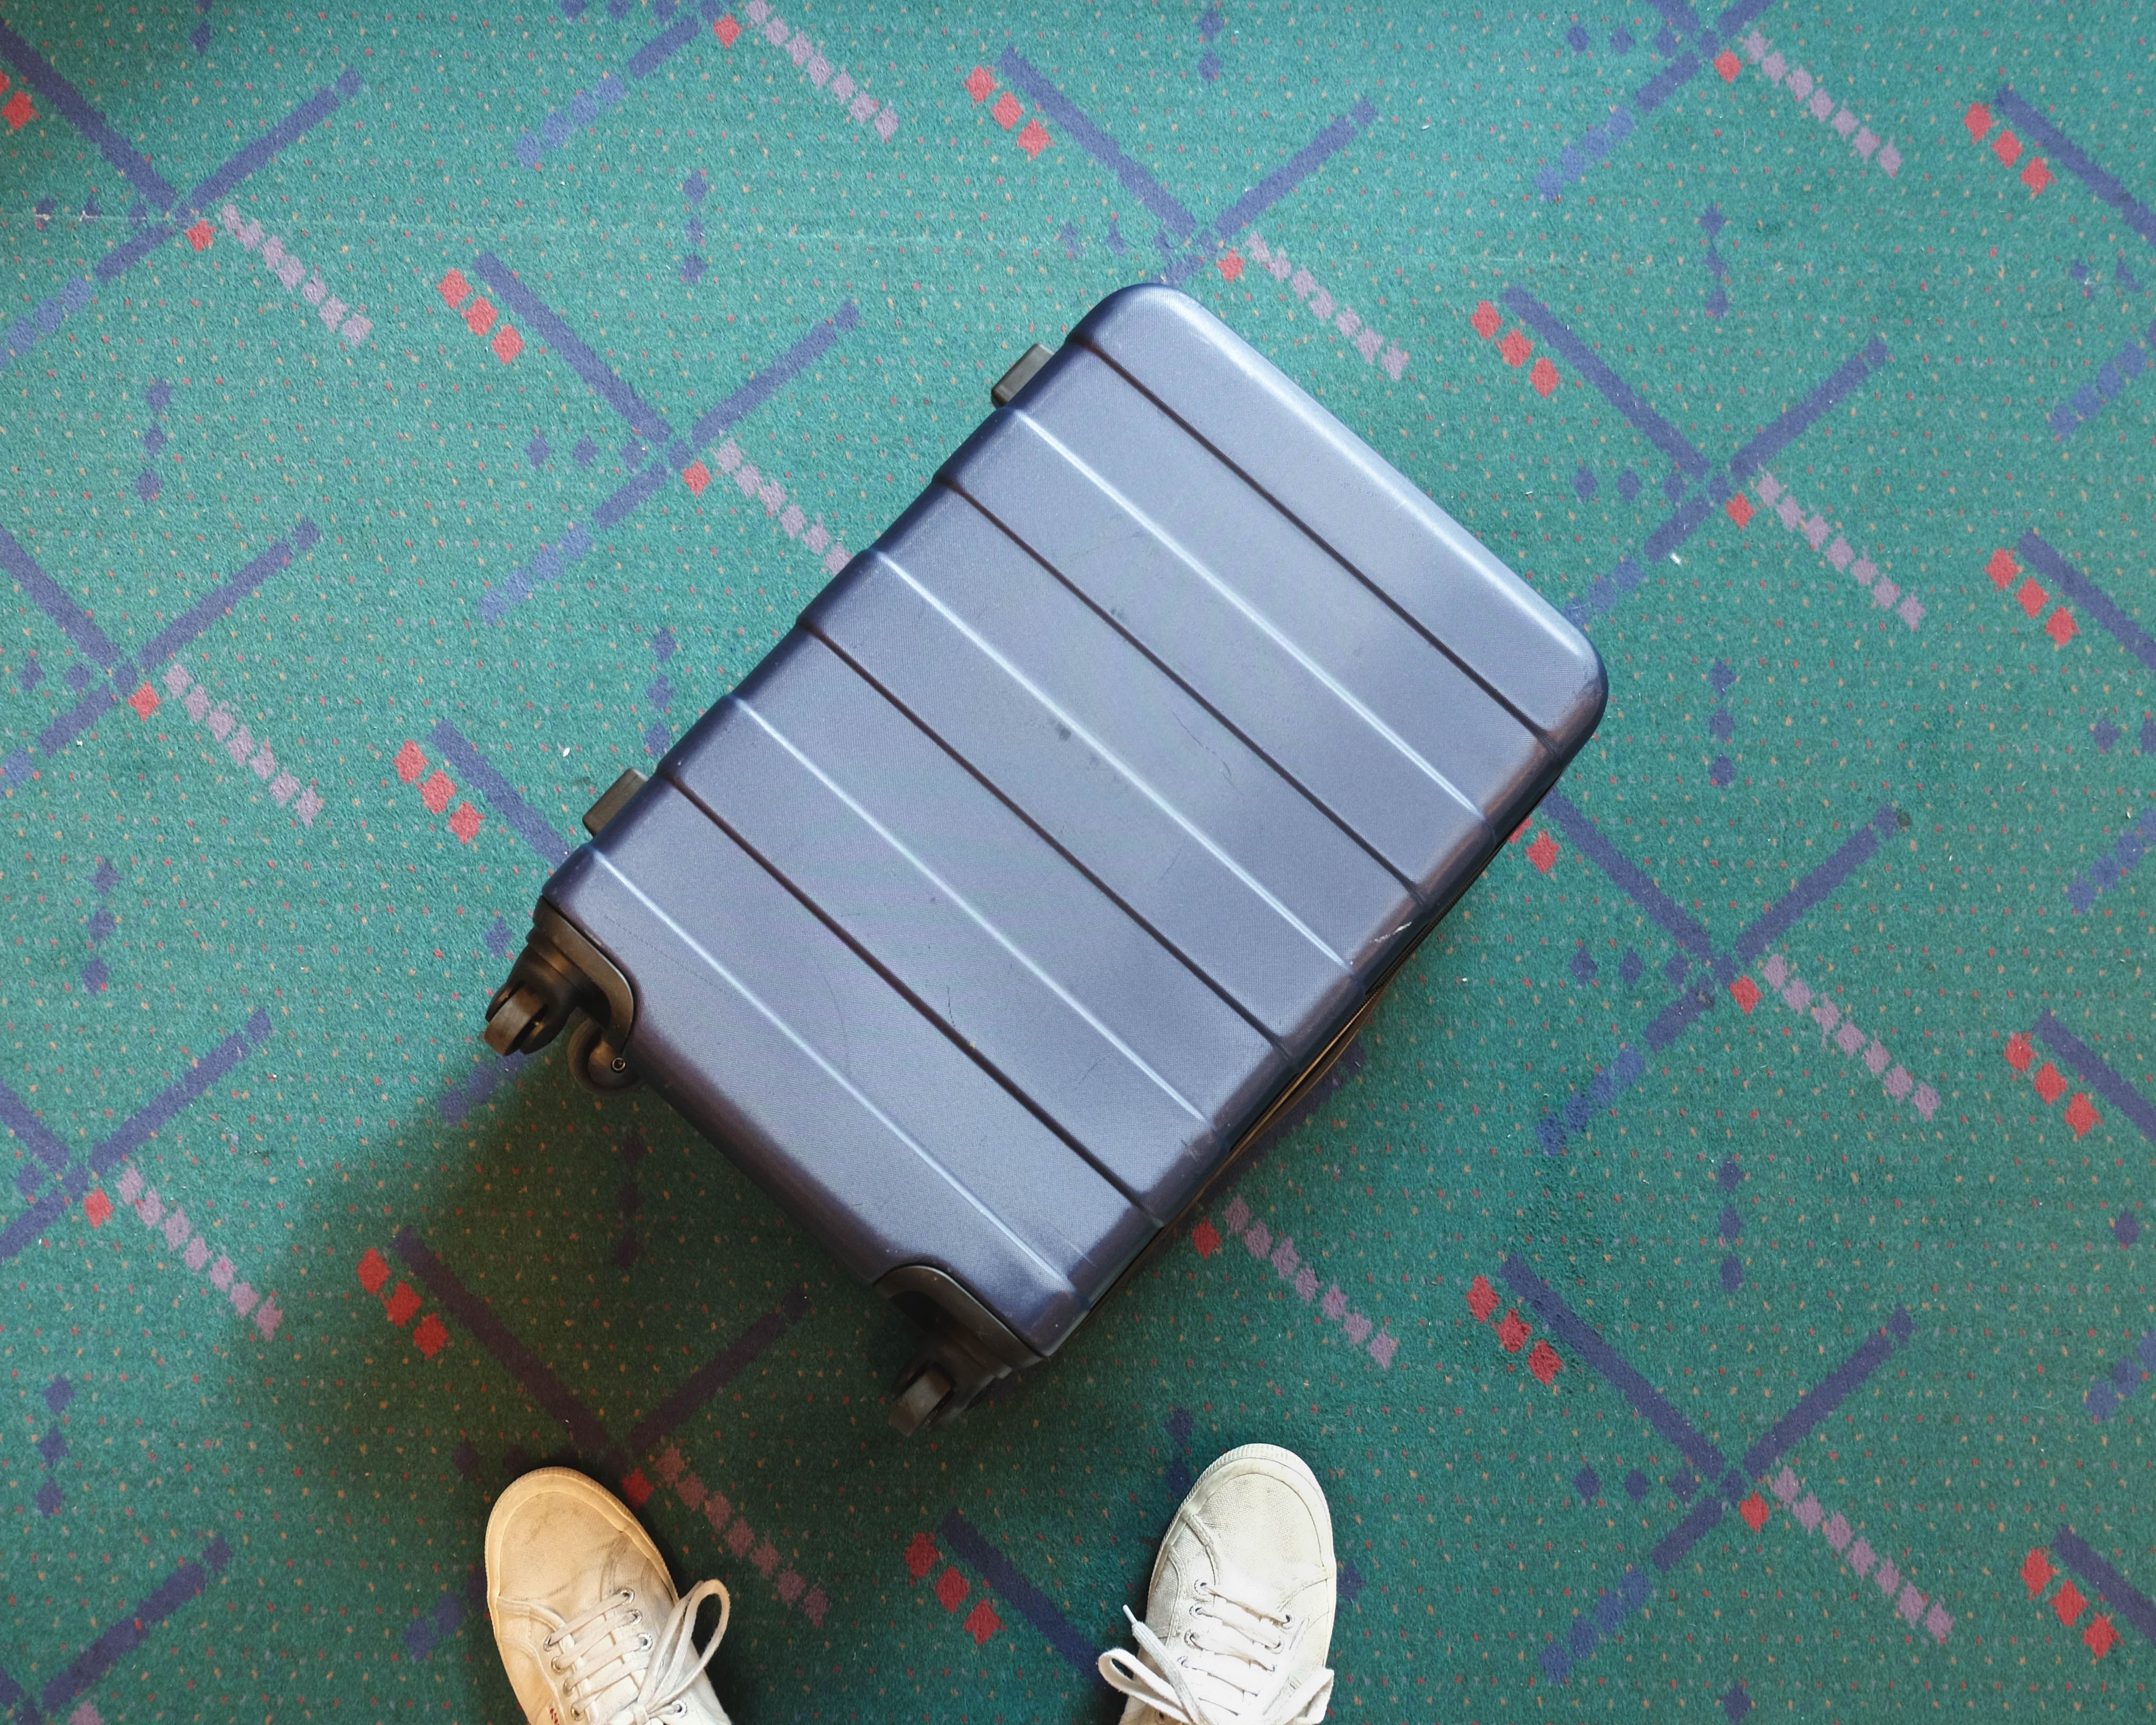 muji 33l suitcase carryon review